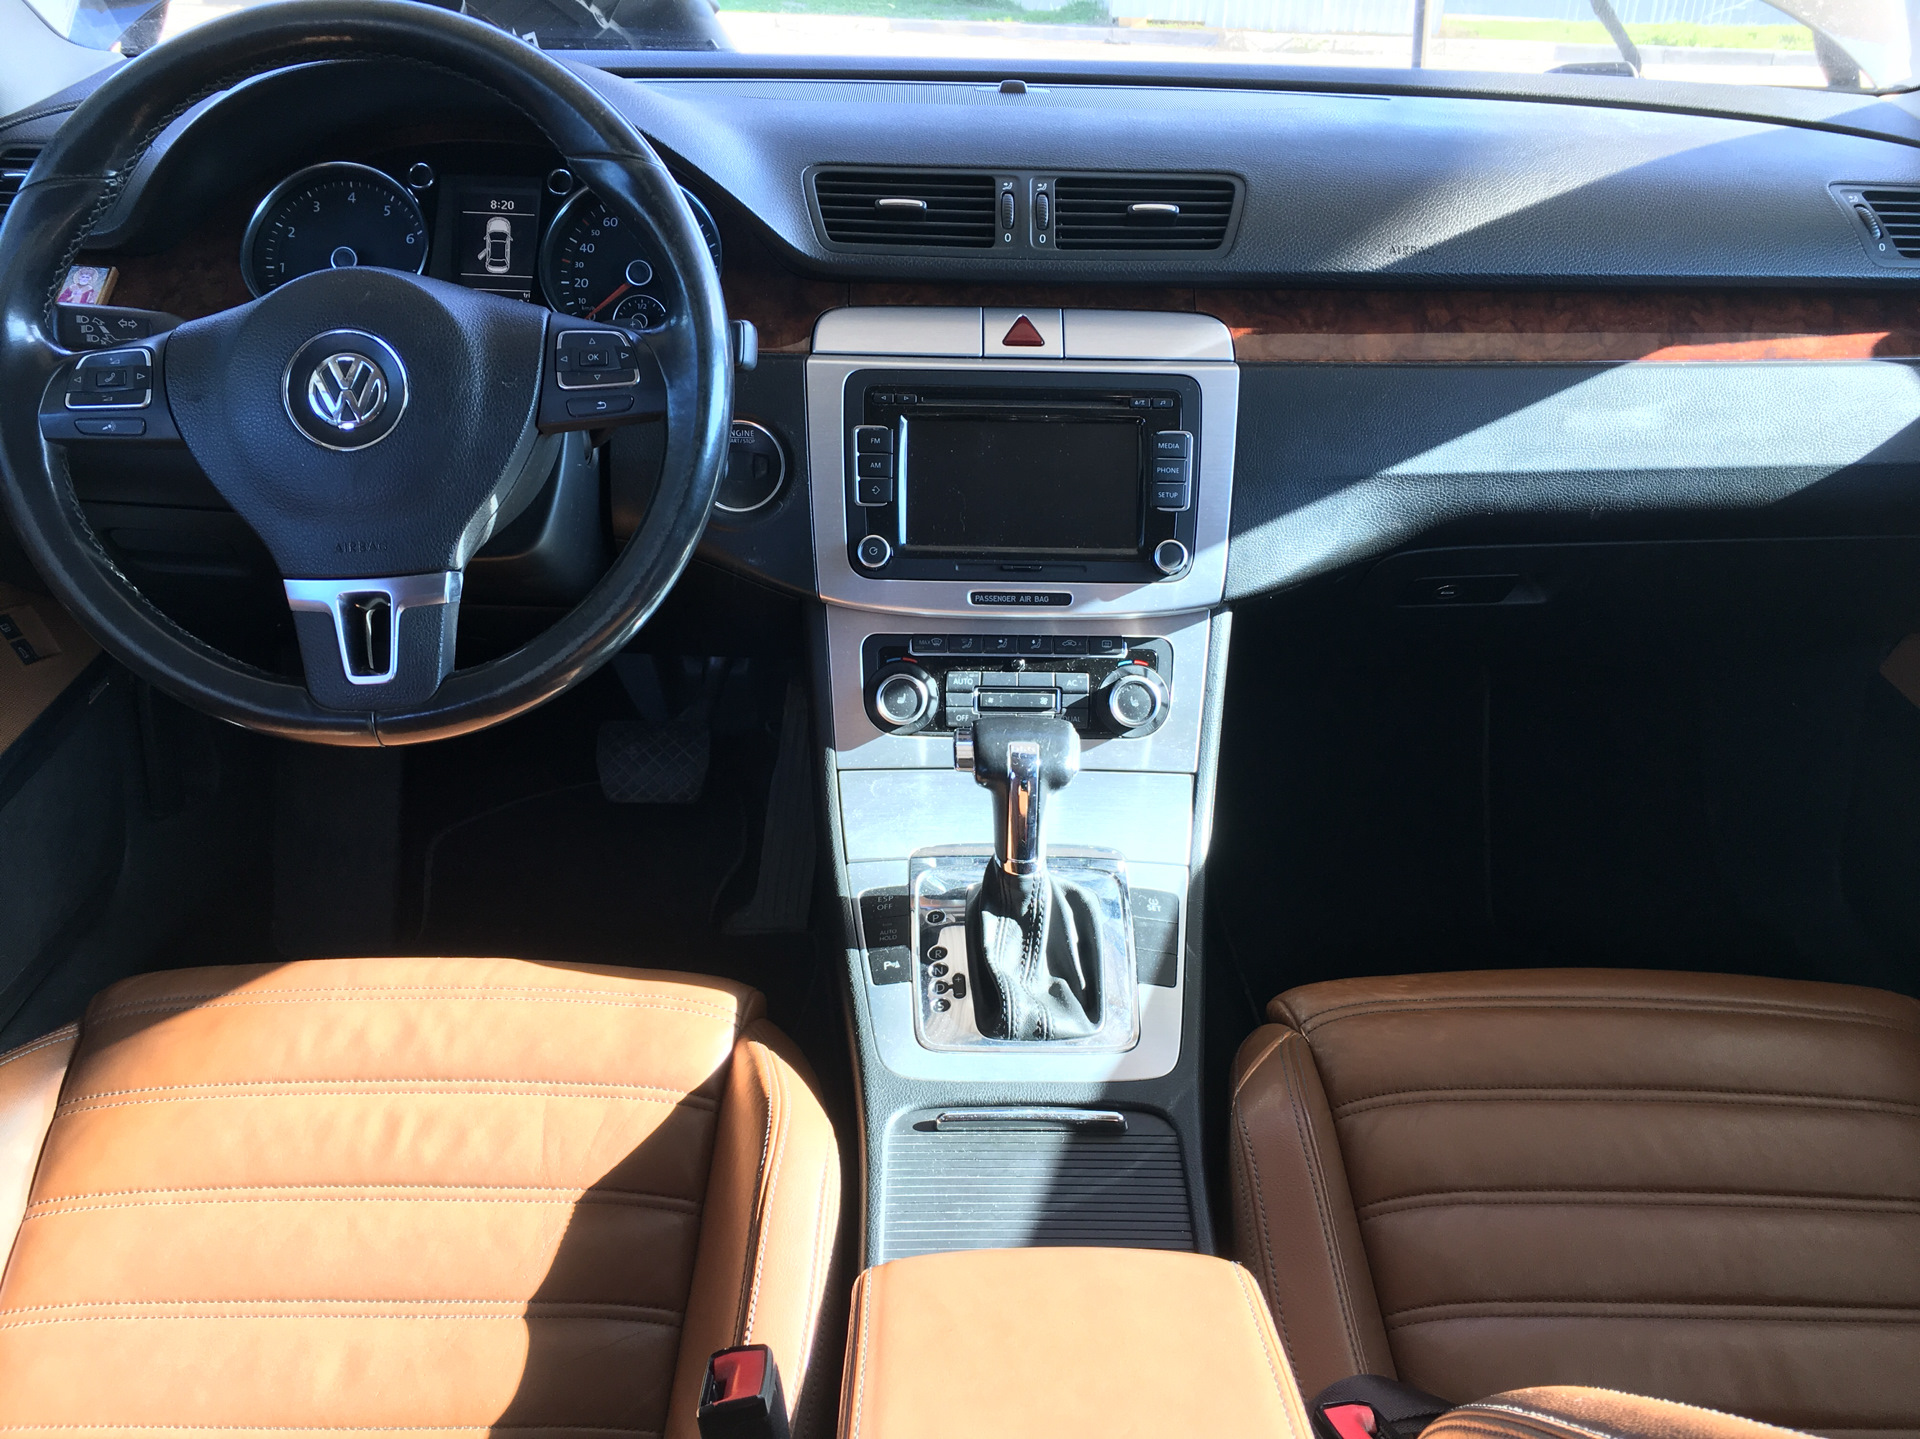 Фольксваген сс 2010. Volkswagen Passat cc 2010 Interior. Volkswagen Passat cc 2013 салон. Volkswagen Passat cc 2010 салон. VW Passat cc 2008 салон.